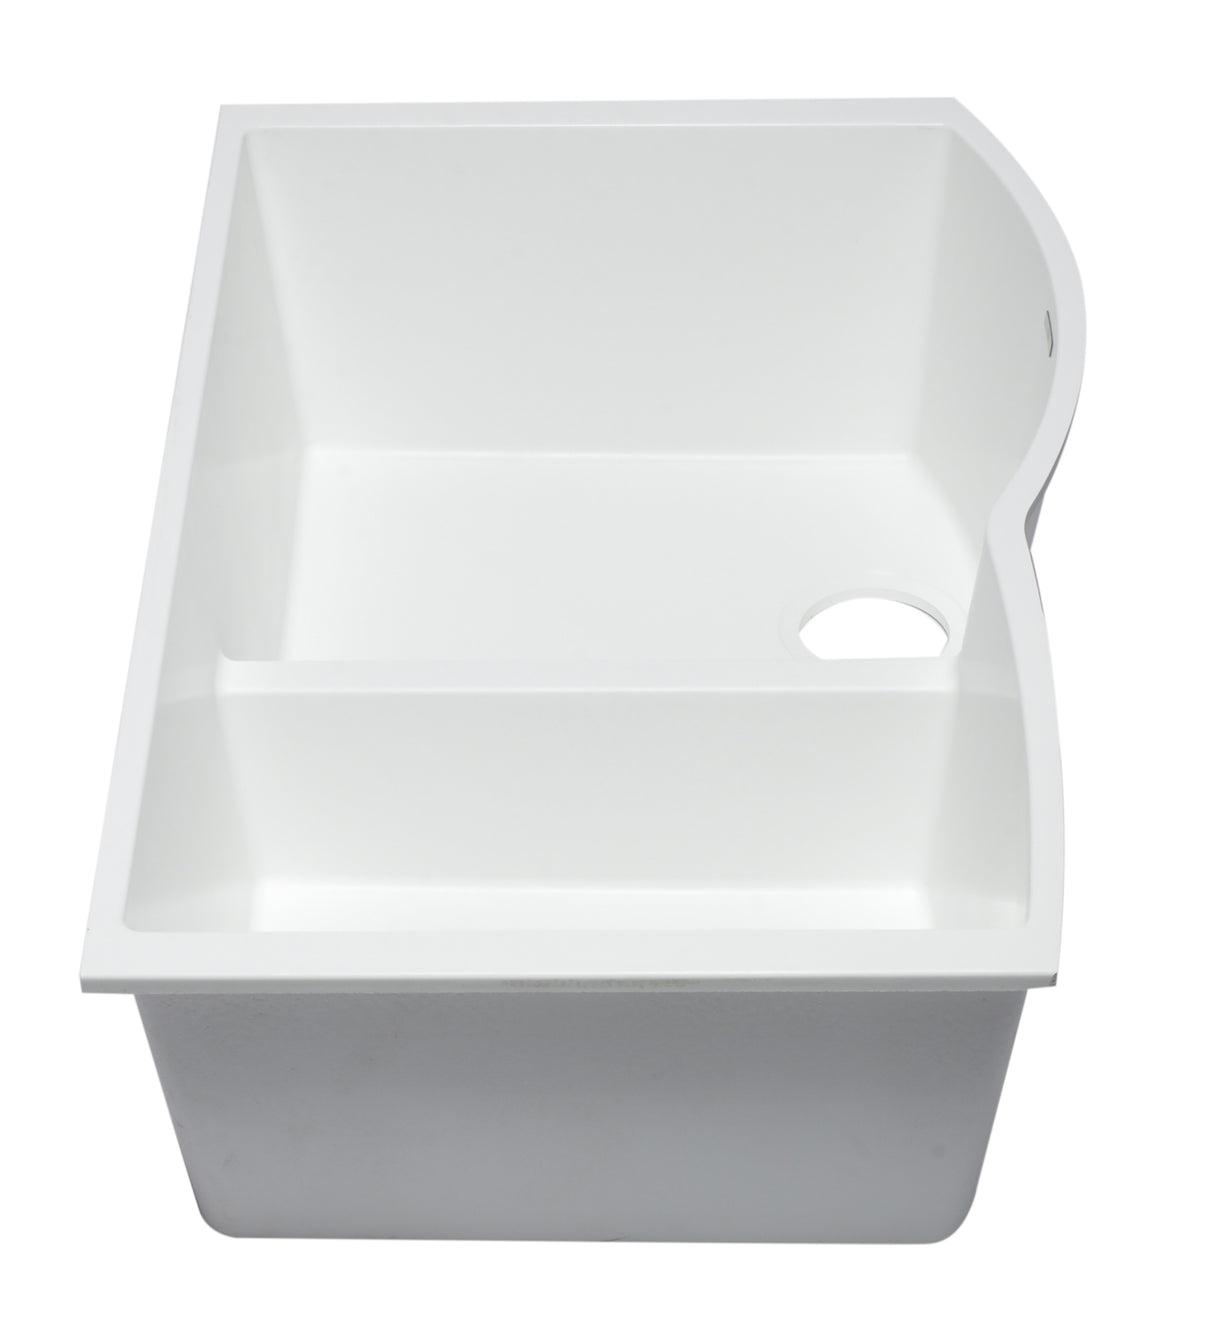 ALFI brand AB3320UM-W White 33" Double Bowl Undermount Granite Composite Kitchen Sink